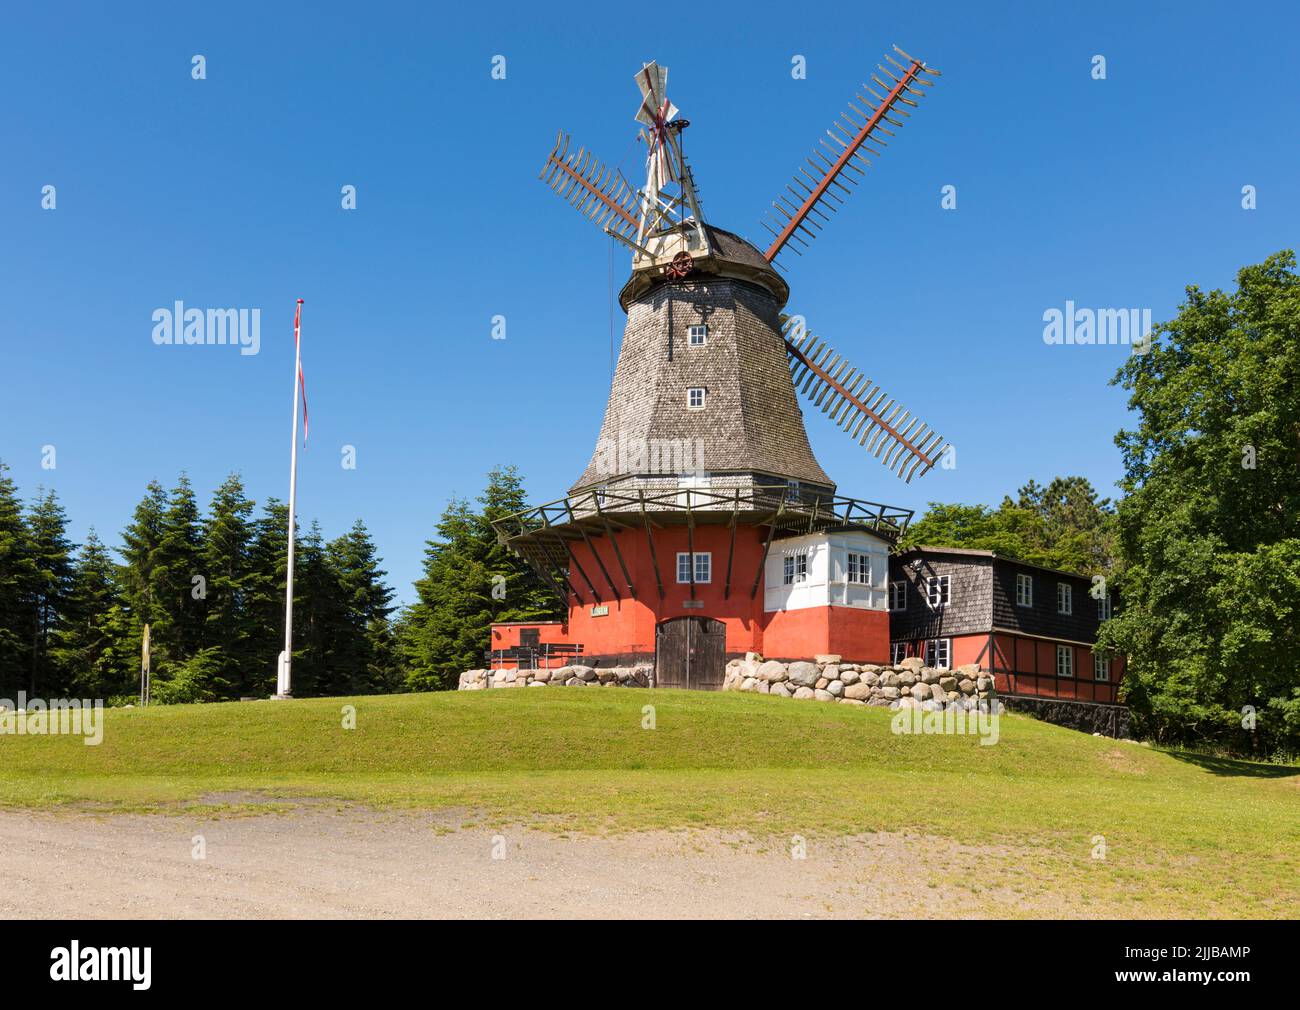 Historic windmill near Tranekær, Langeland, Denmark, belonging to the castle, today inhabiting a museum Stock Photo